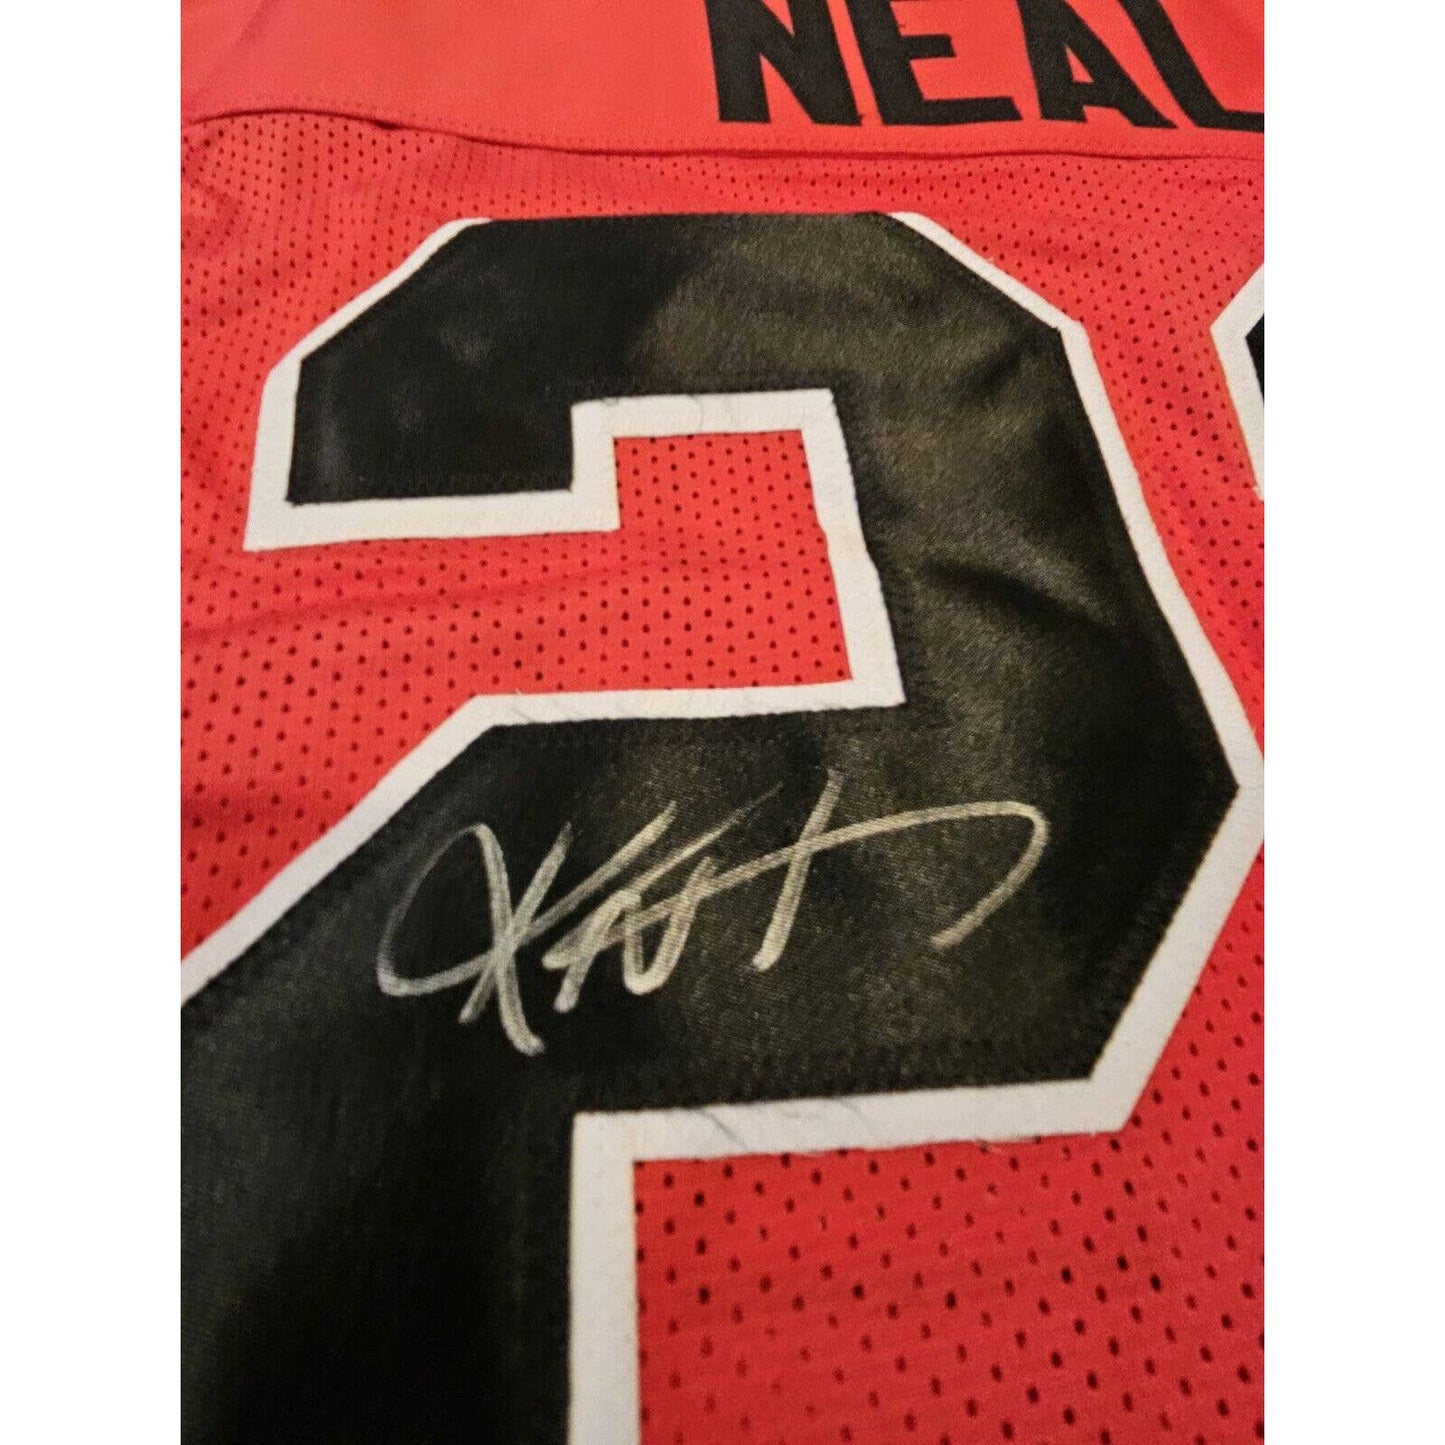 Keanu Neal Autographed/Signed Jersey JSA Atlanta Falcons - TreasuresEvolved